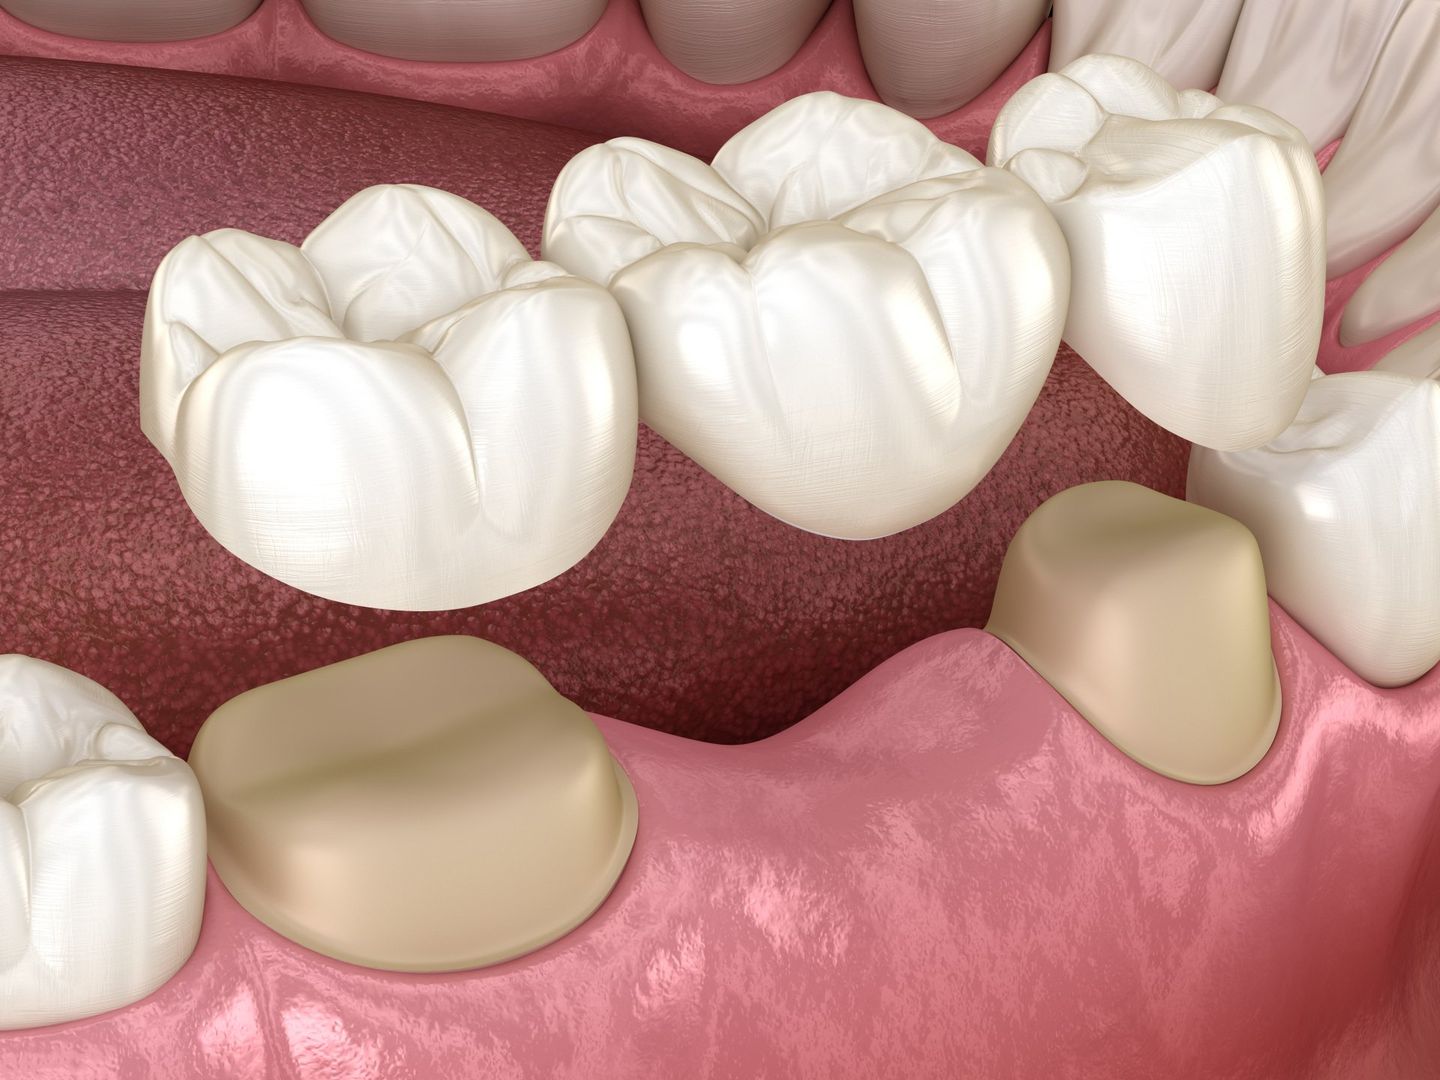 Dental Bridge Of 3 Teeth Over Molar And Premolar - Dental Treatments in Port Macquarie, NSW